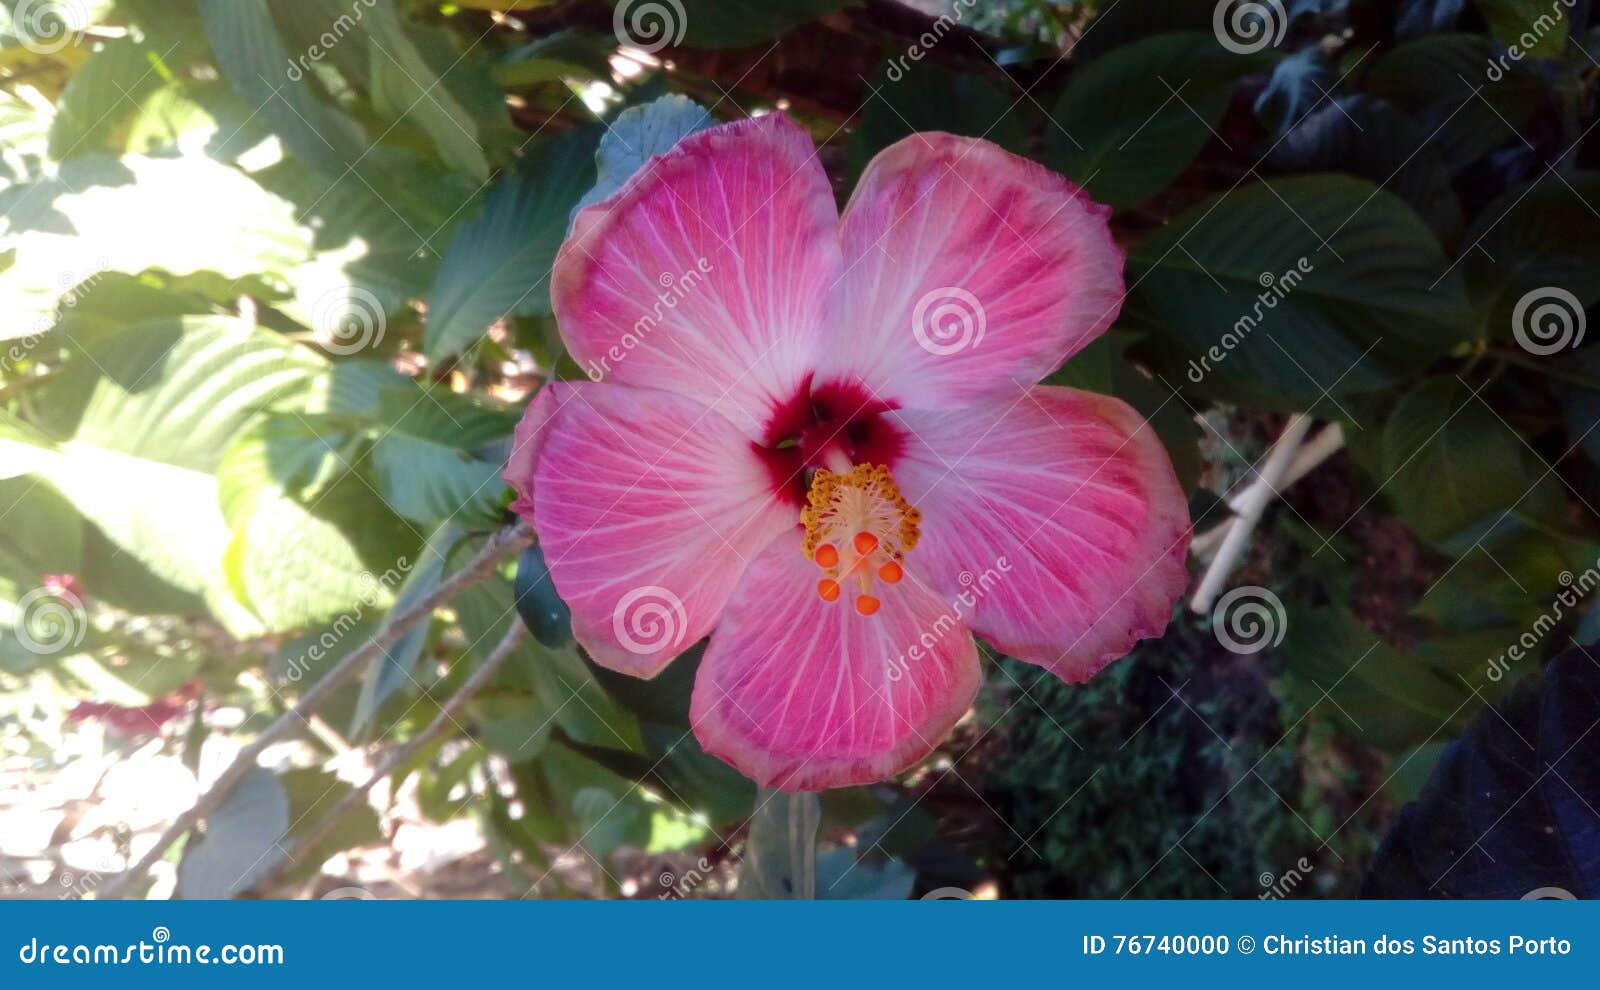 Rosa Linda tropical flower stock photo. Image of janeiro - 76740000